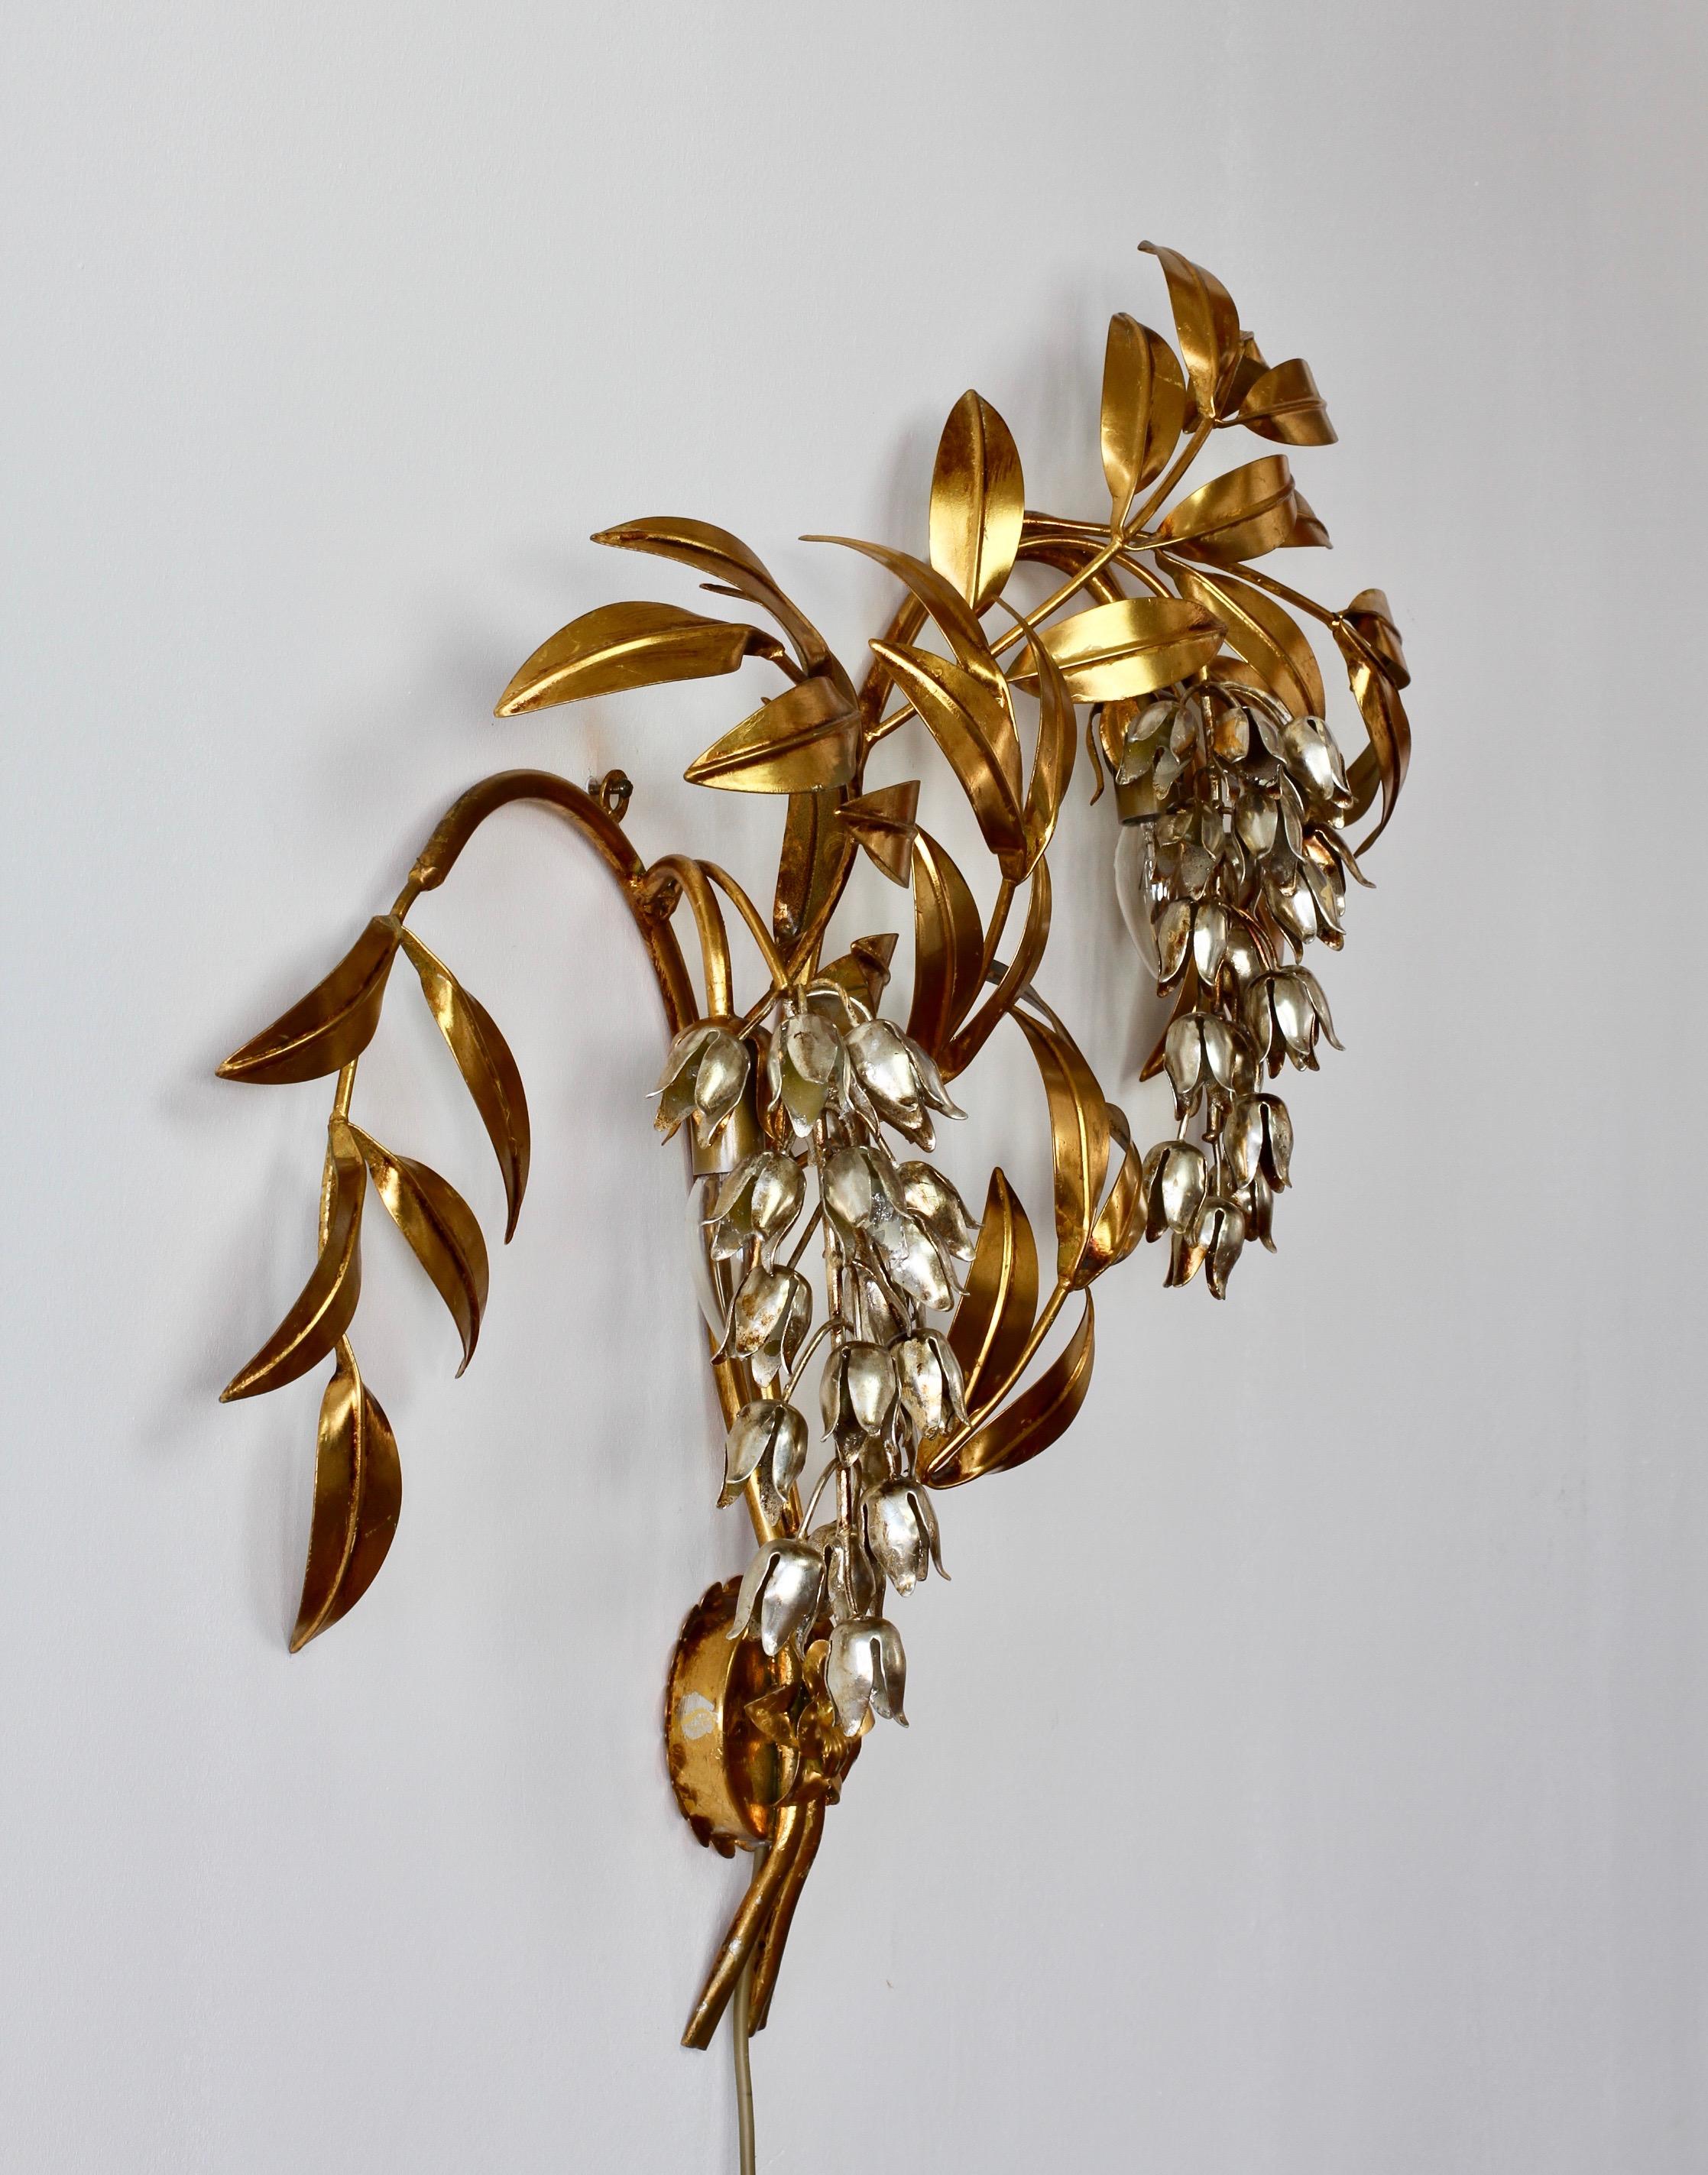 Hans Kögl Italian Pioggia d'Oro Ornate Gilt Vintage Wall Light, Lamp or Sconce For Sale 3